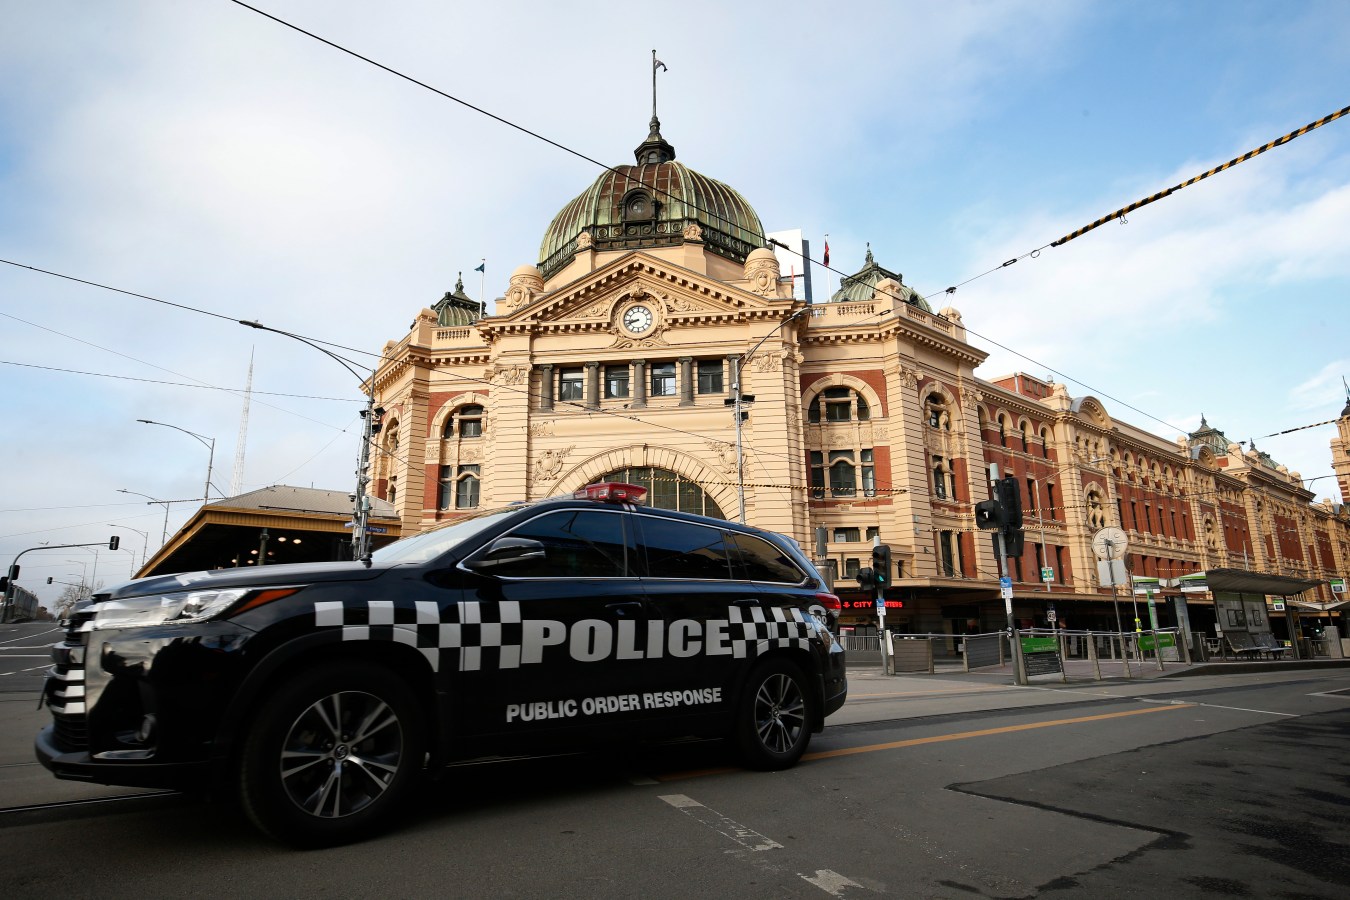 Police vehicle outside Flinders Street Railway Station in Melbourne